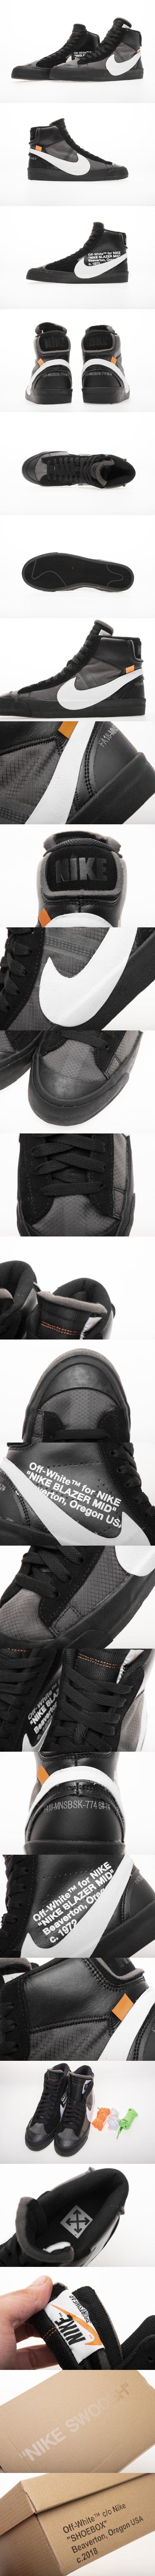 Off-White x Nike Blazer Mid Black AA3832-001 オフホワイト x ナイキ ブレイザー ブラック